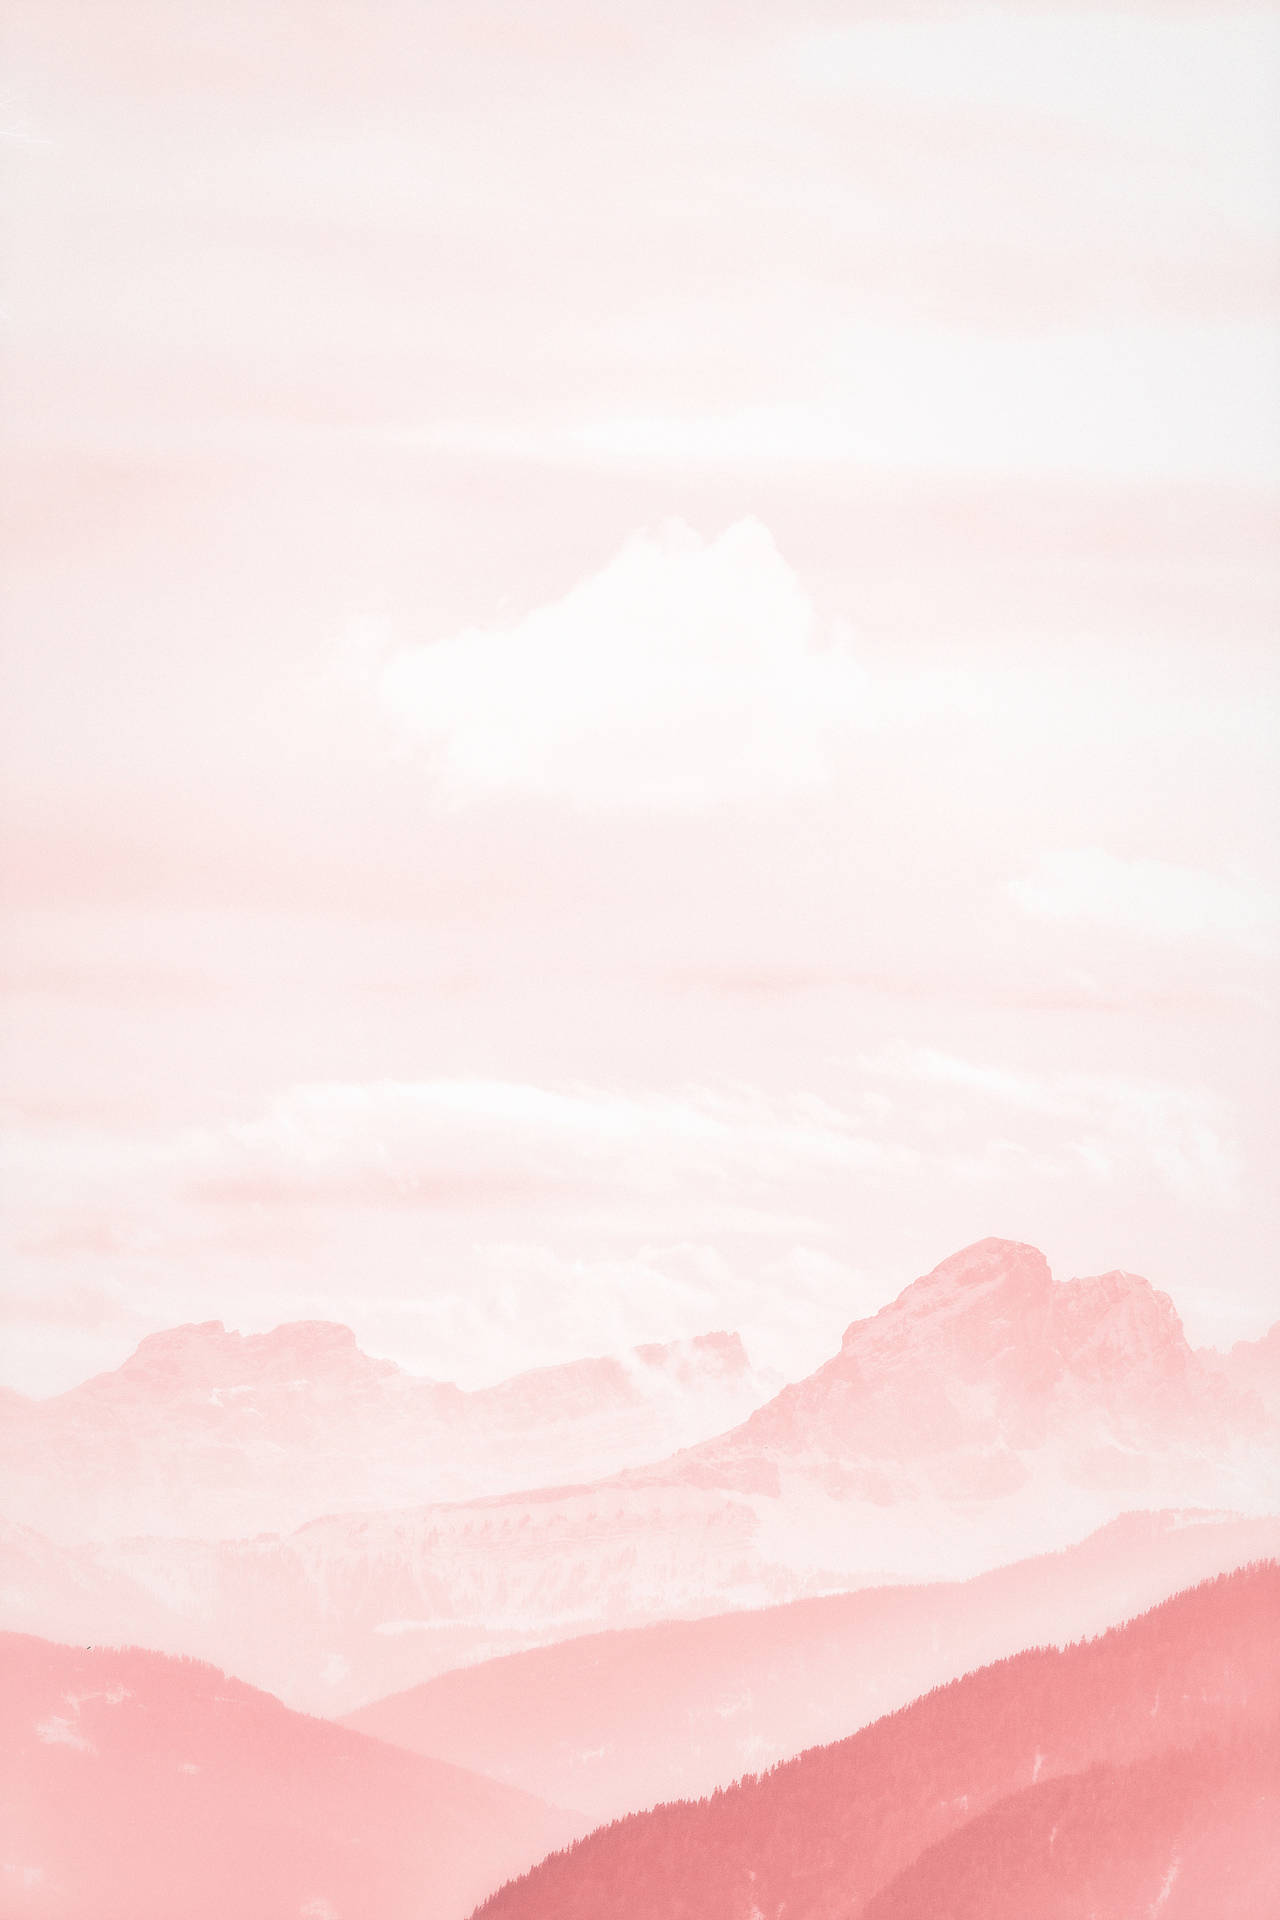 Cute Simple Pink Sky Aesthetic Desktop Wallpaper